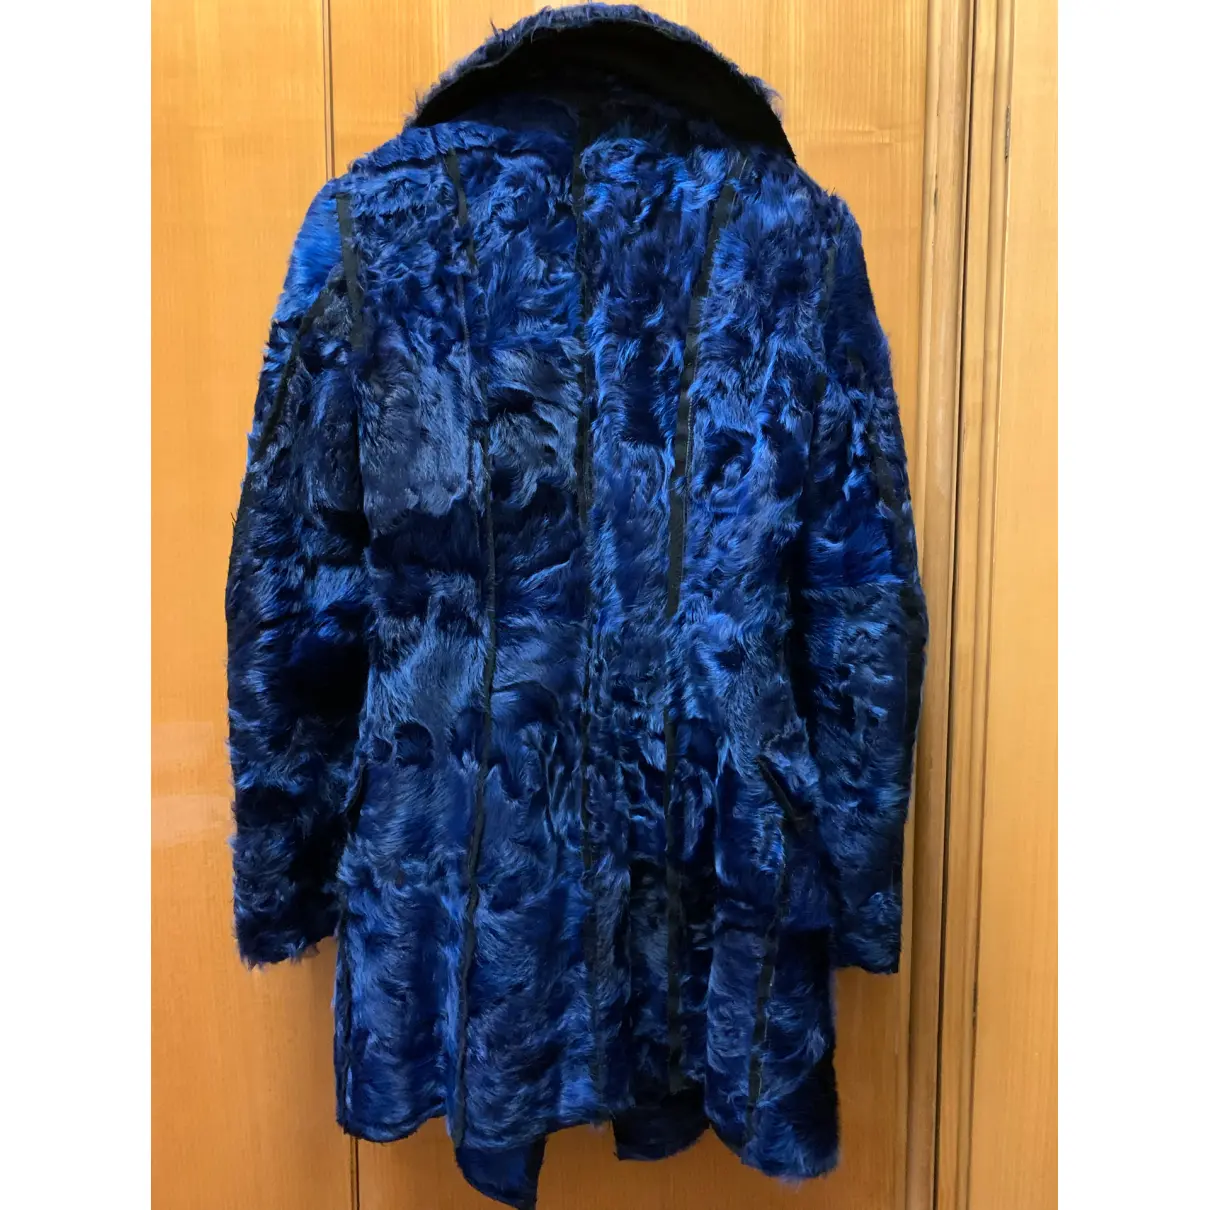 Buy Carlo Tivioli Mongolian lamb coat online